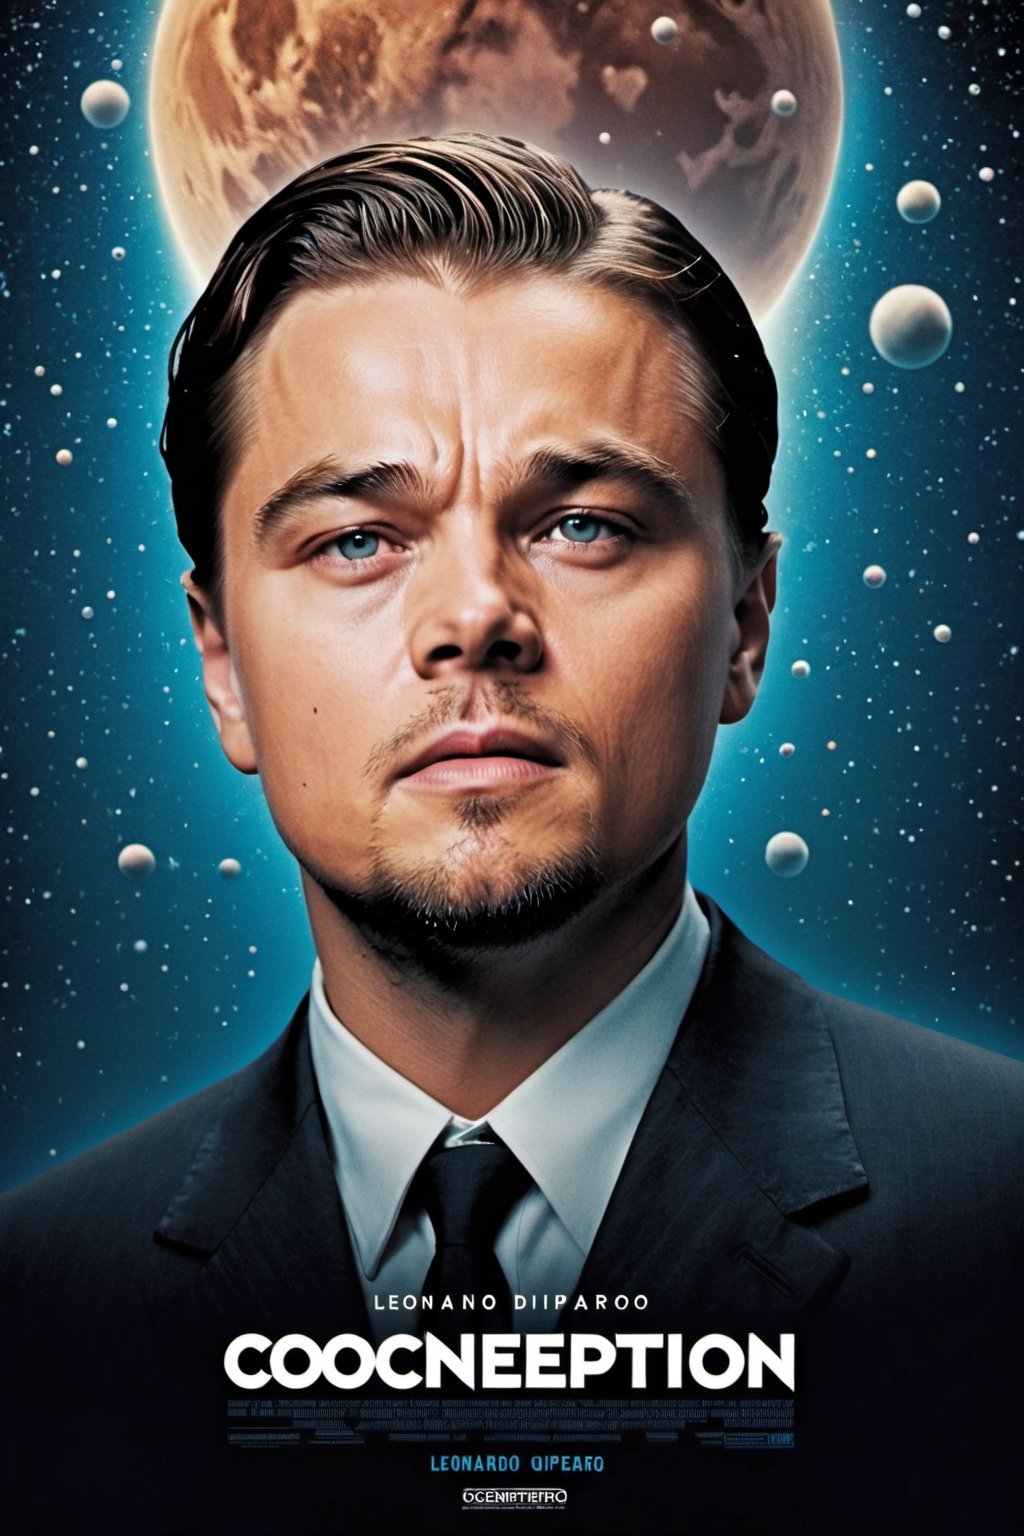 Movie poster of "Conception" starring Leonardo DiCaprio.